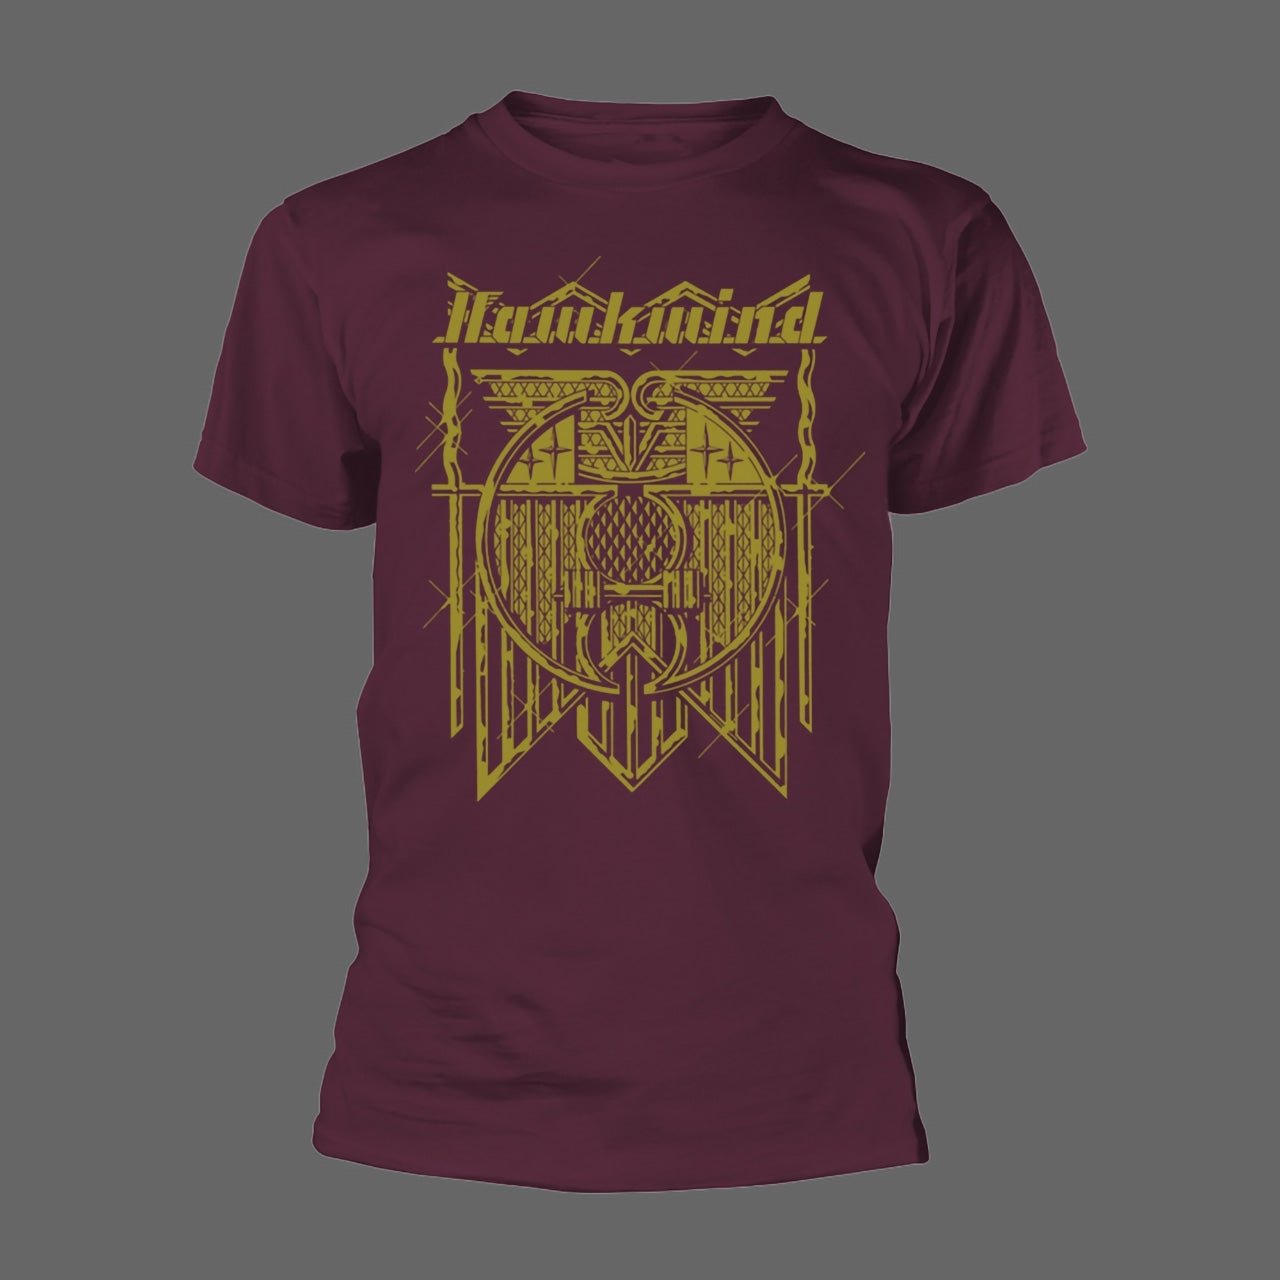 Hawkwind - Doremi Fasol Latido (Maroon) (T-Shirt)